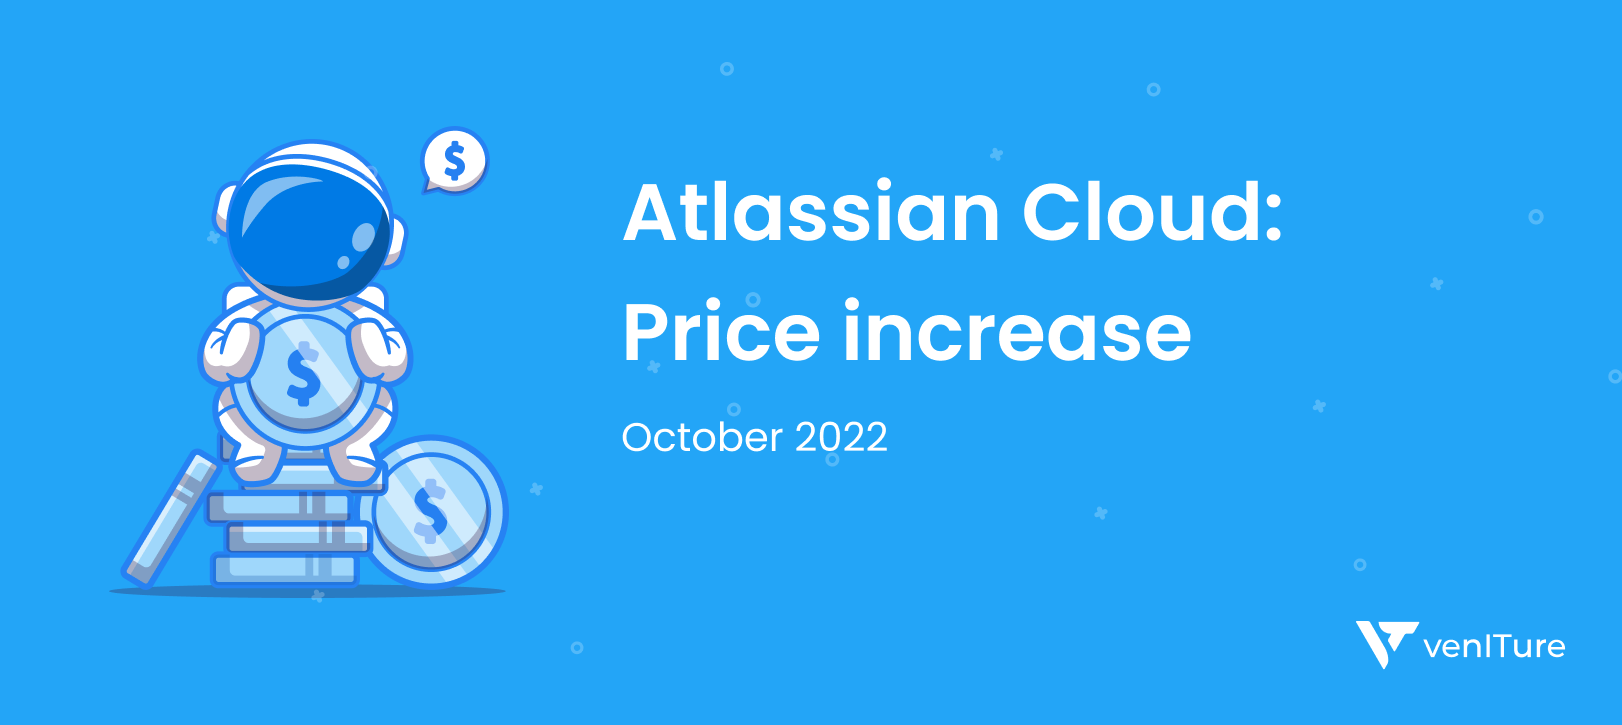 Atlassian Cloud Price Increase Oct 22